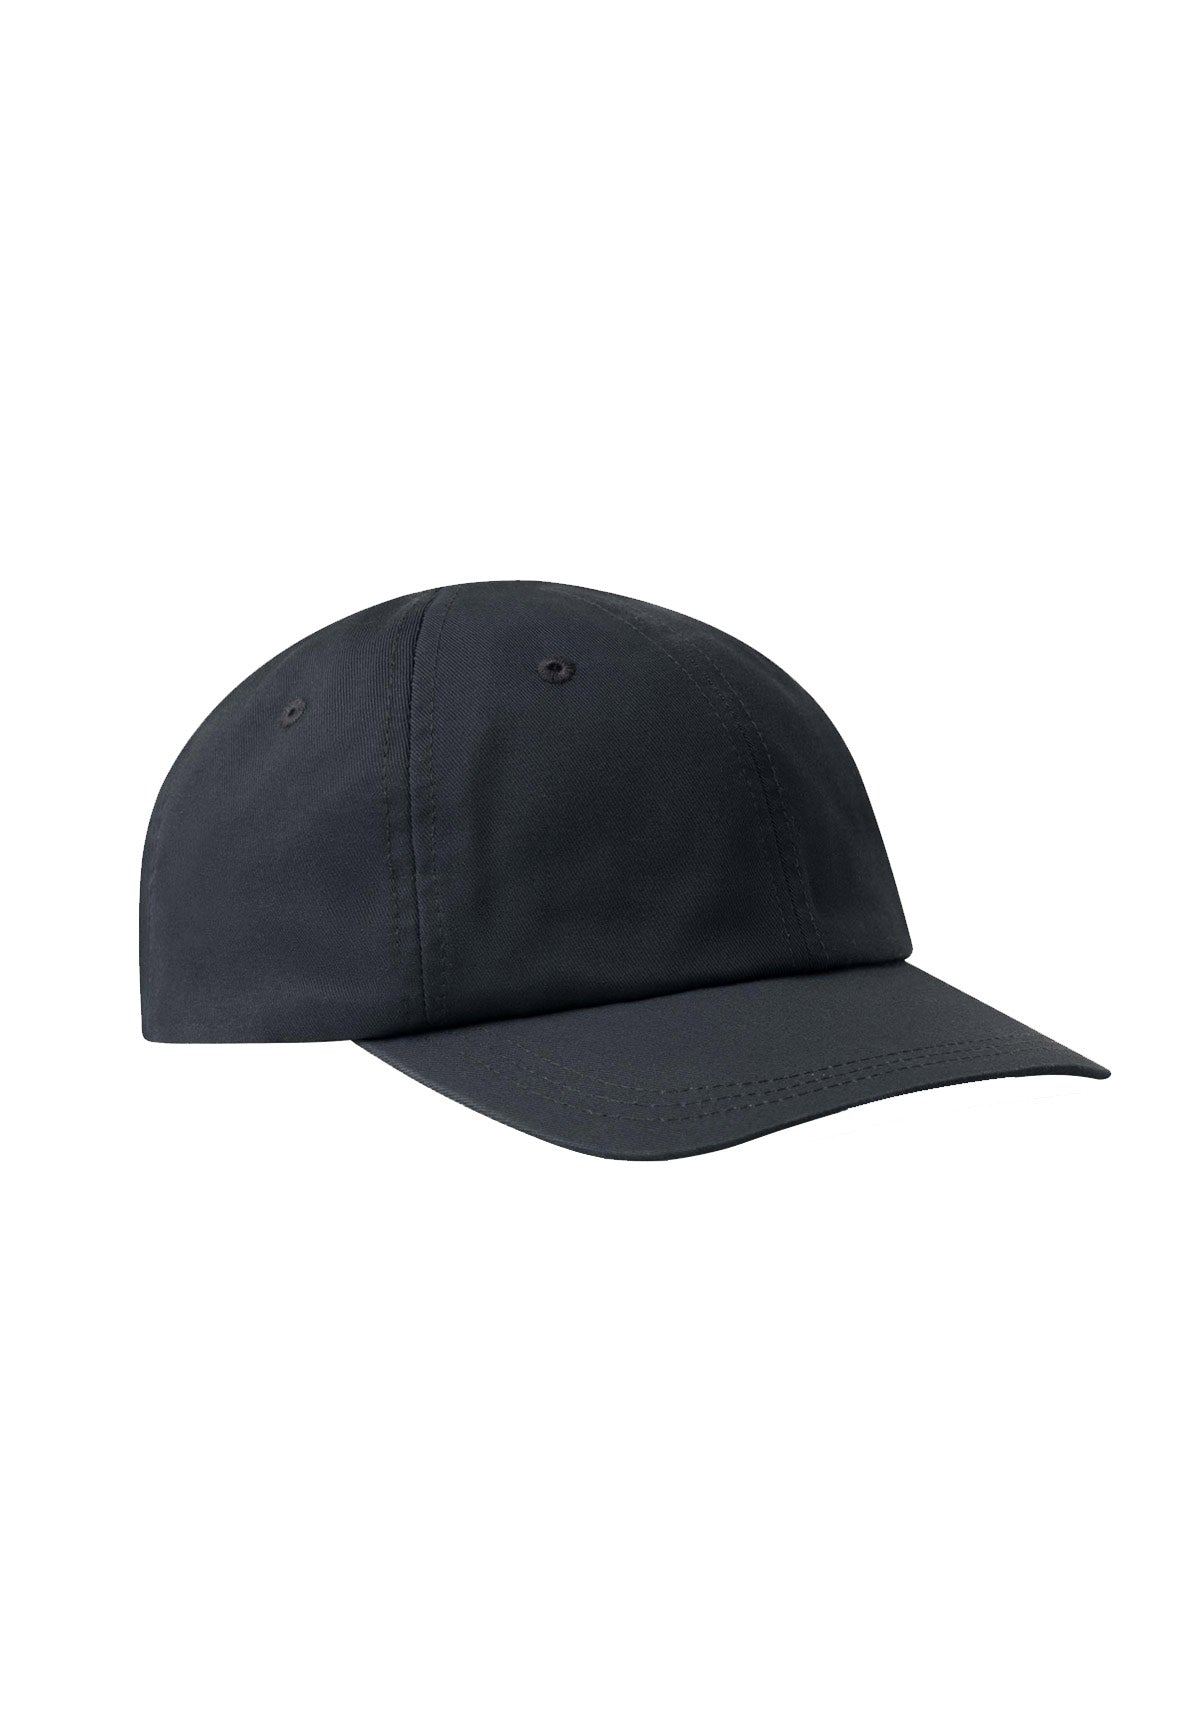 MAC CAP BLACK